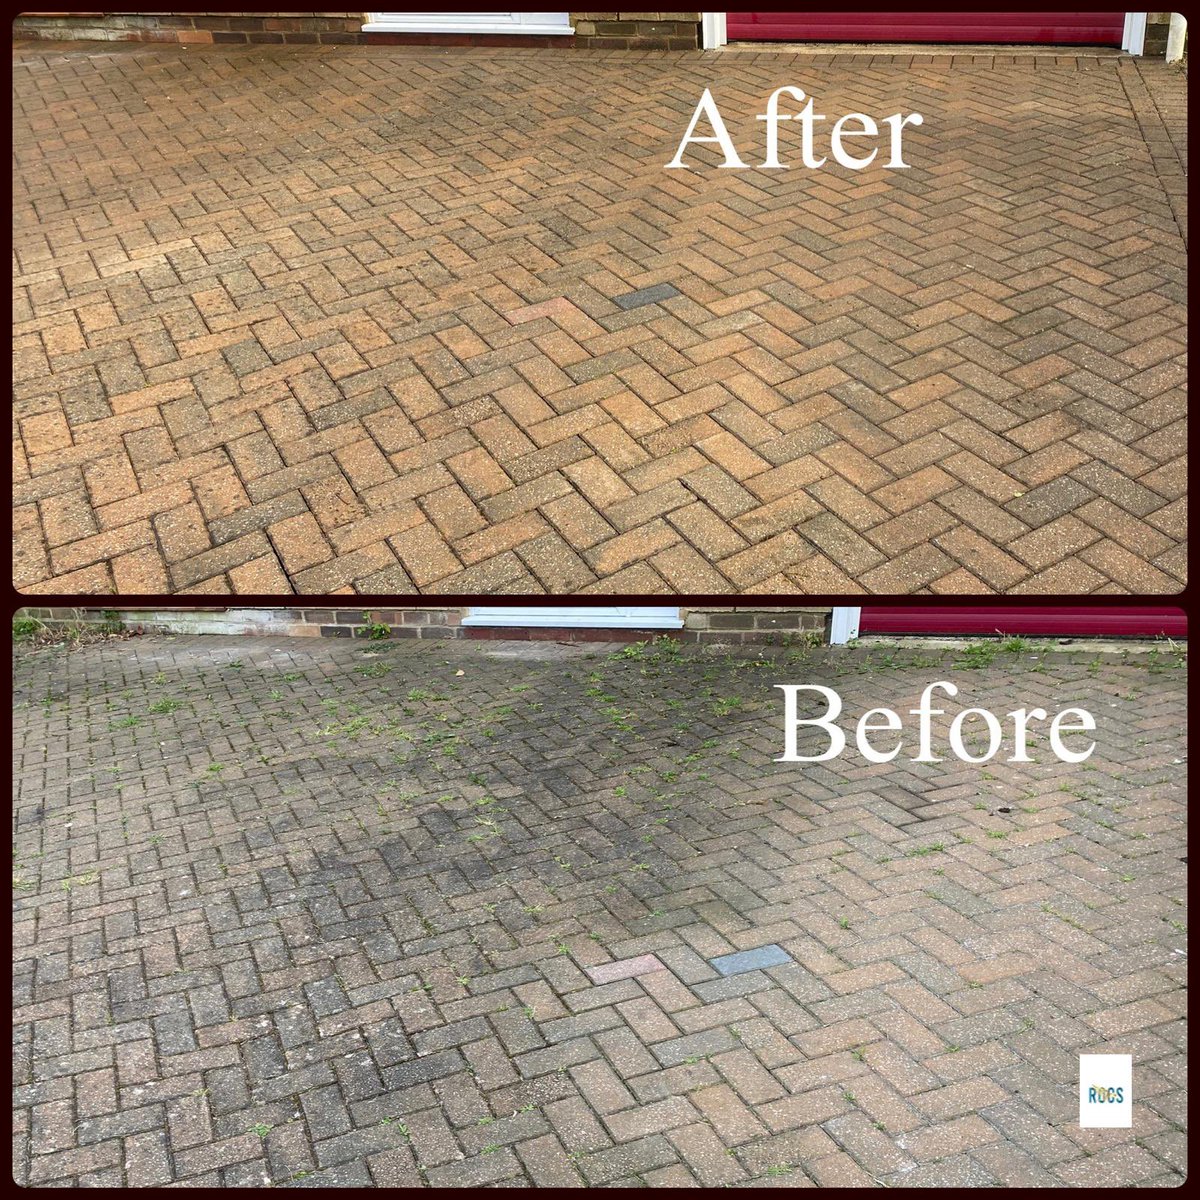 Driveway Cleaning completed in Basingstoke 

#drivewaycleaning #pressurewashing